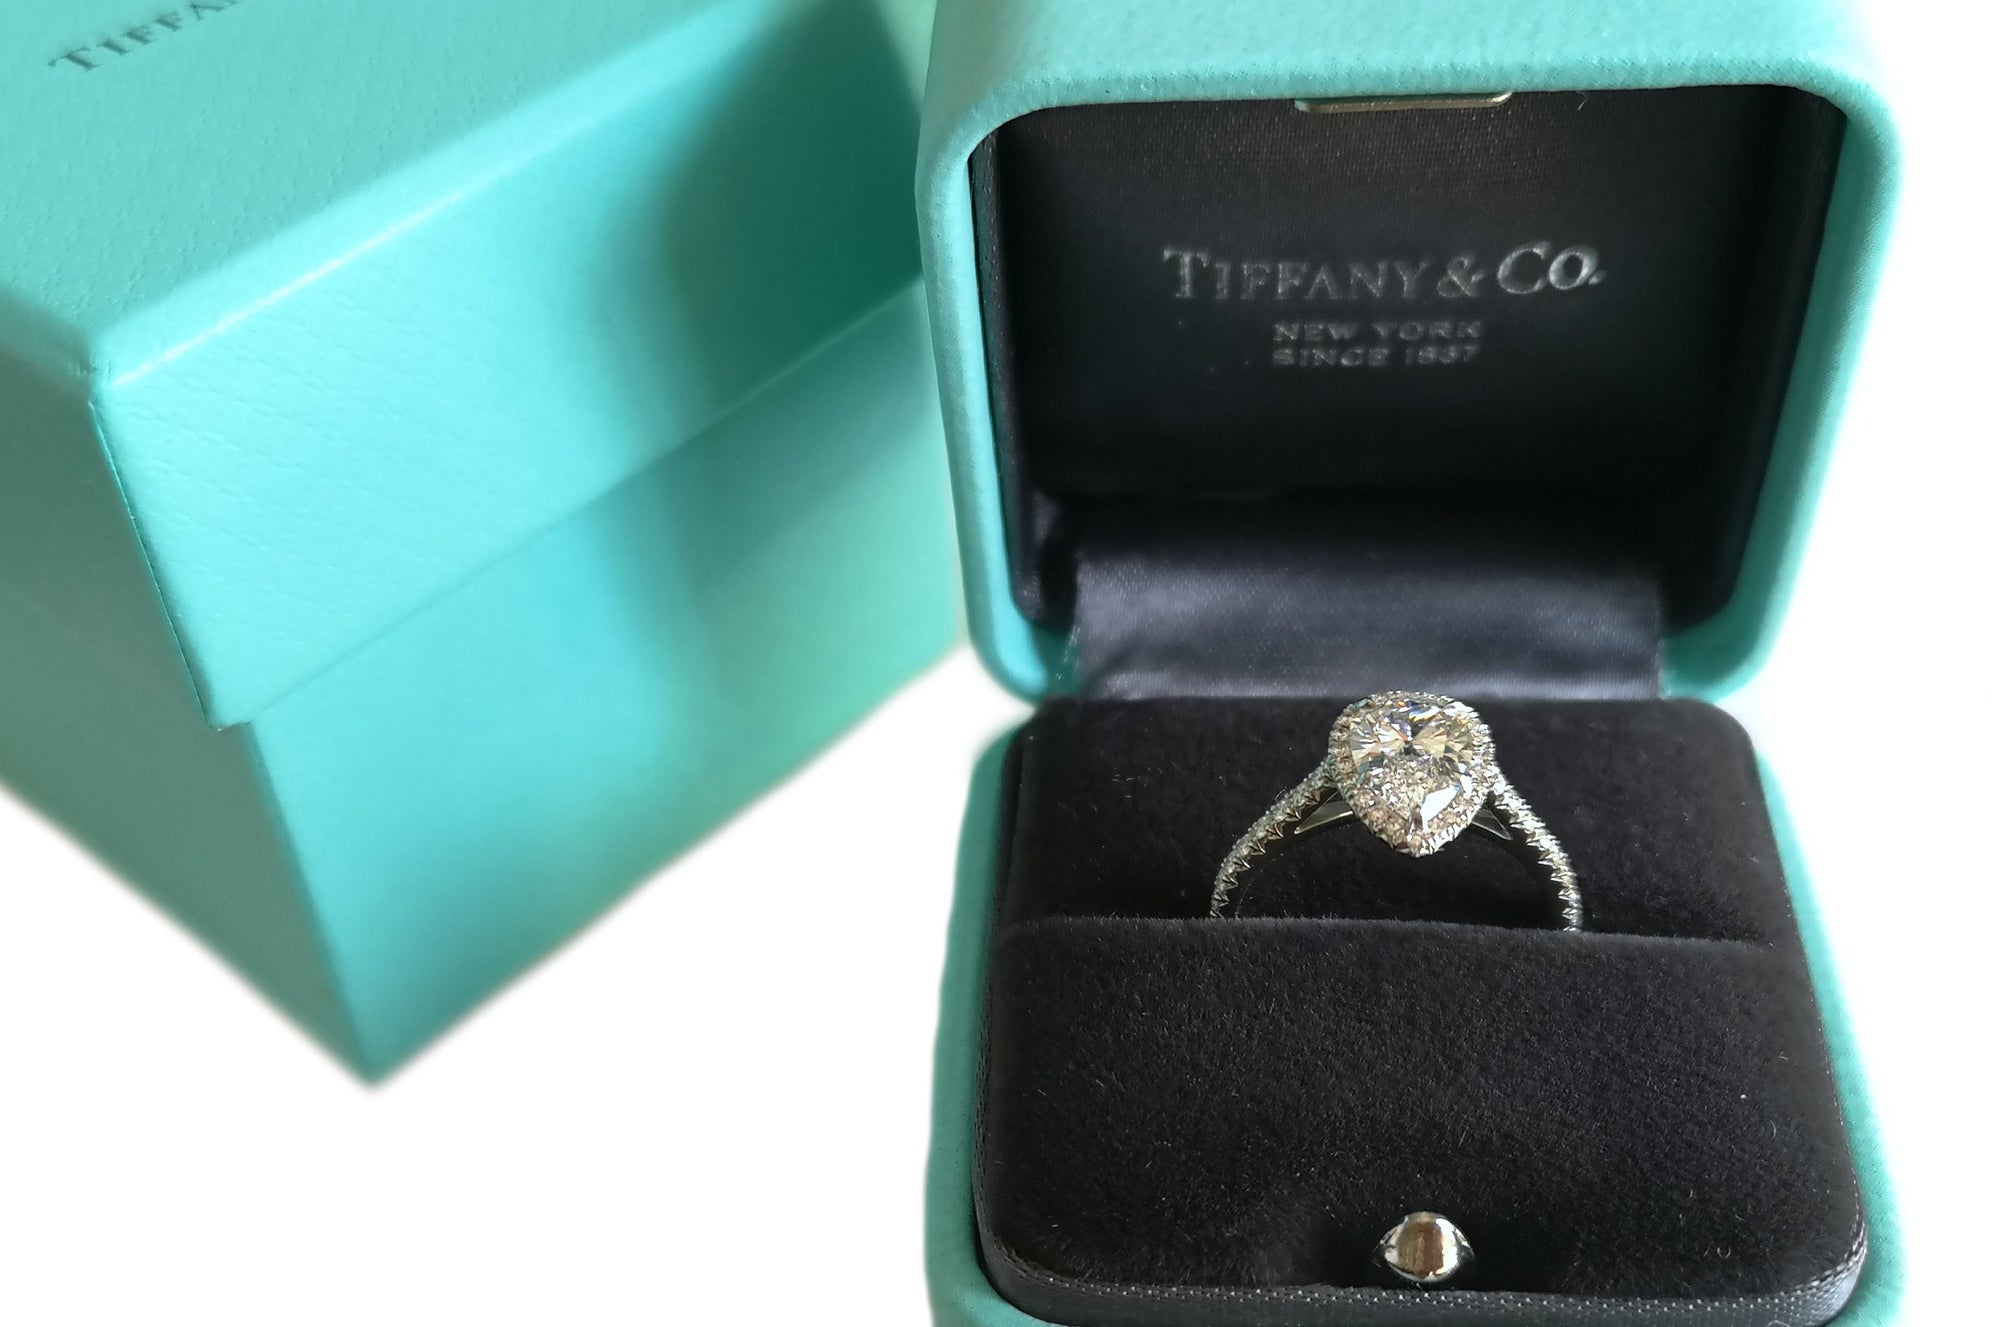 Tiffany & Co. 1.03ct E/VS1 Pear Shaped Soleste Diamond Engagement Ring in box